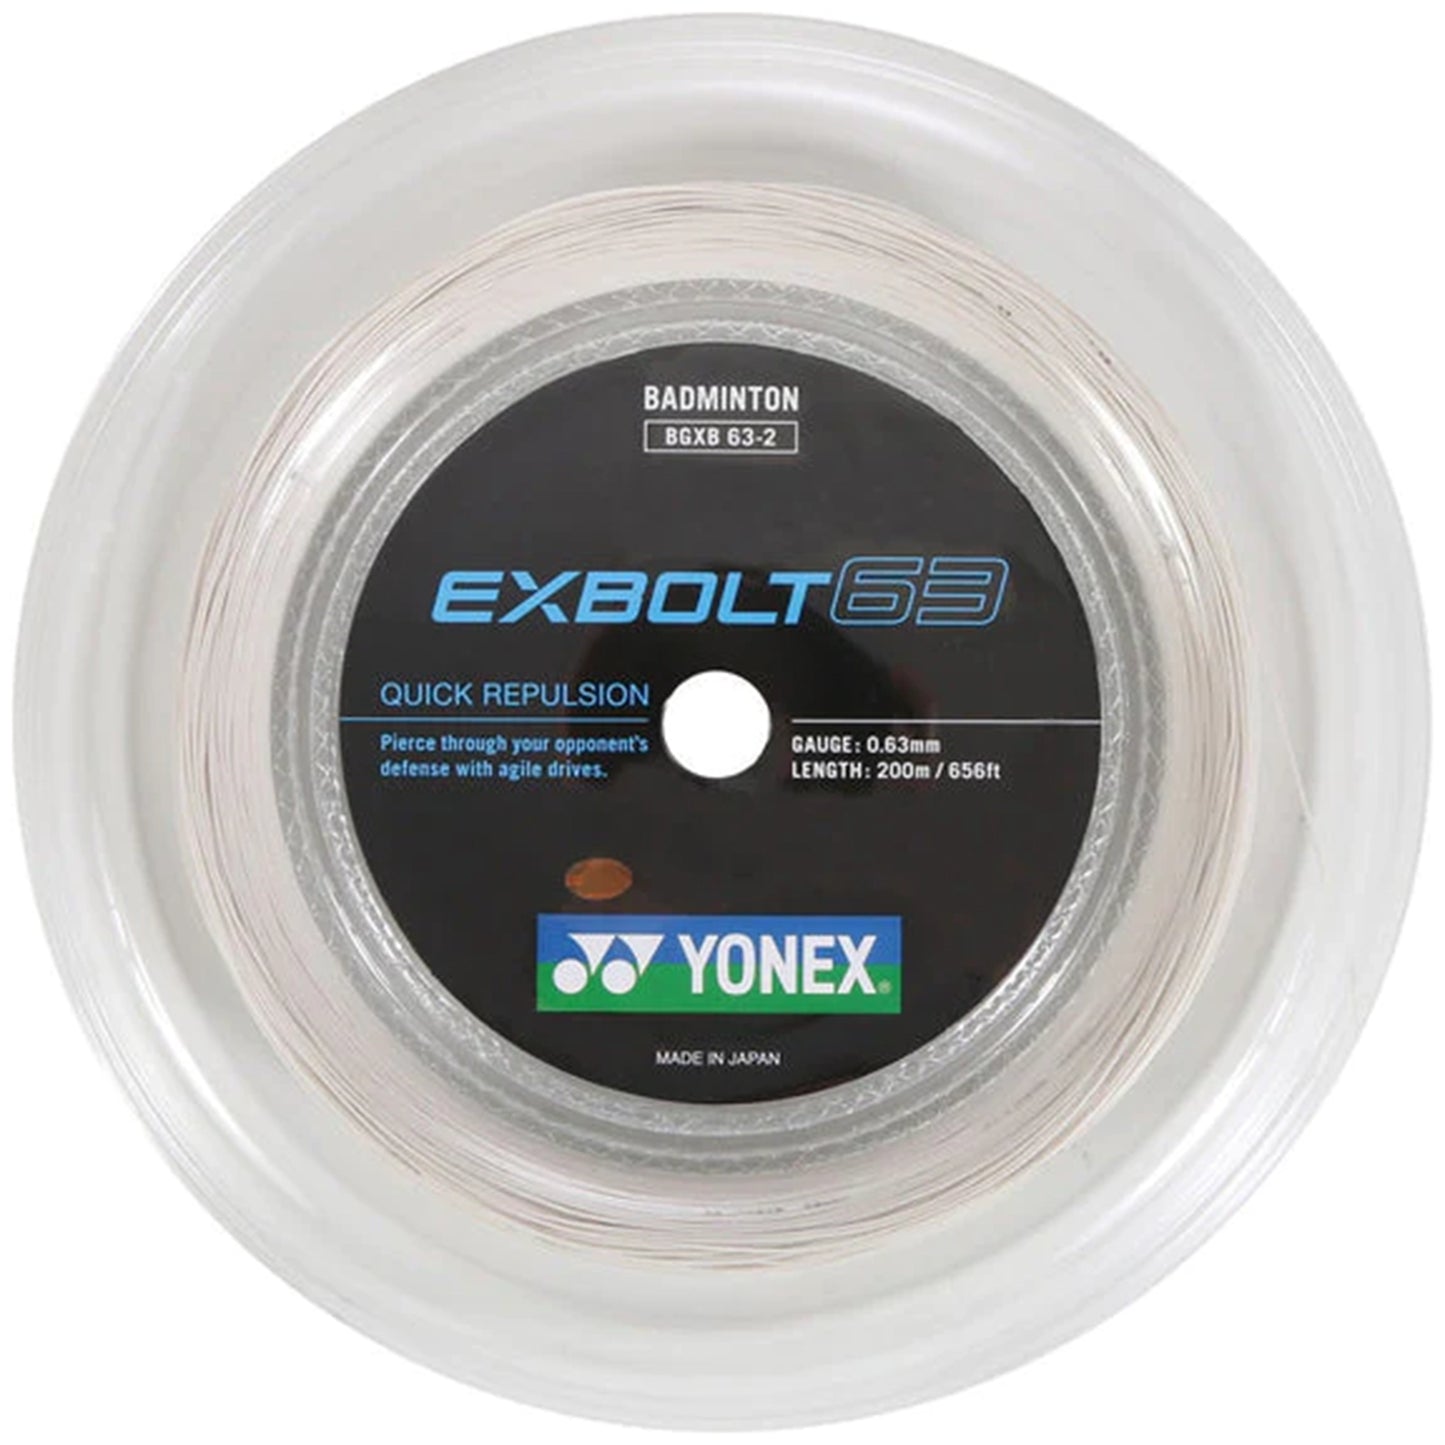 Yonex reel BG EXBOLT 63 White (200m)